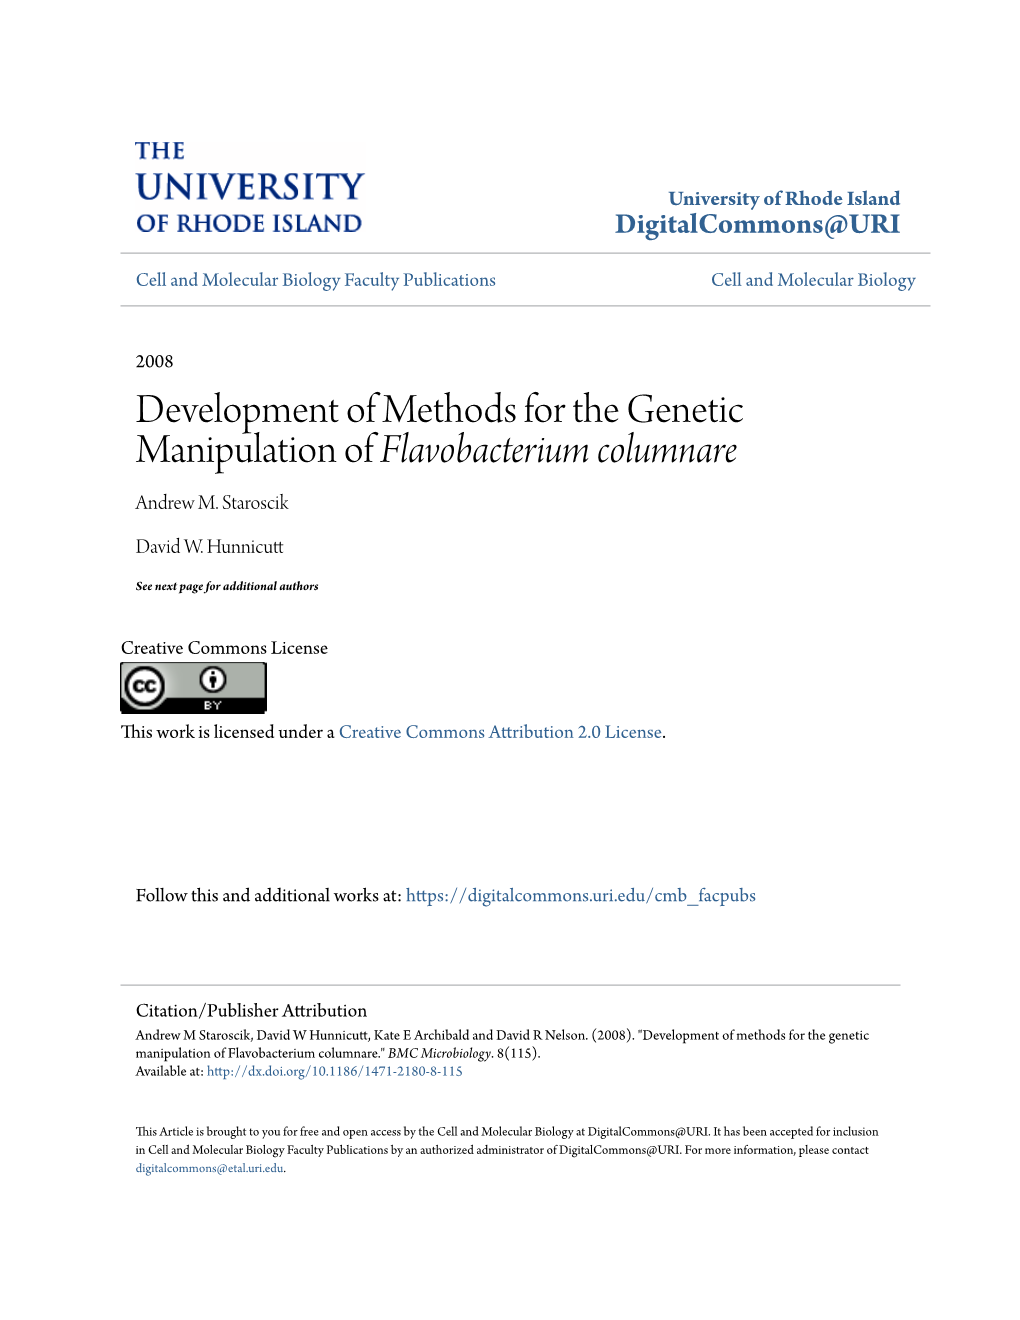 Development of Methods for the Genetic Manipulation of Flavobacterium Columnare Andrew M